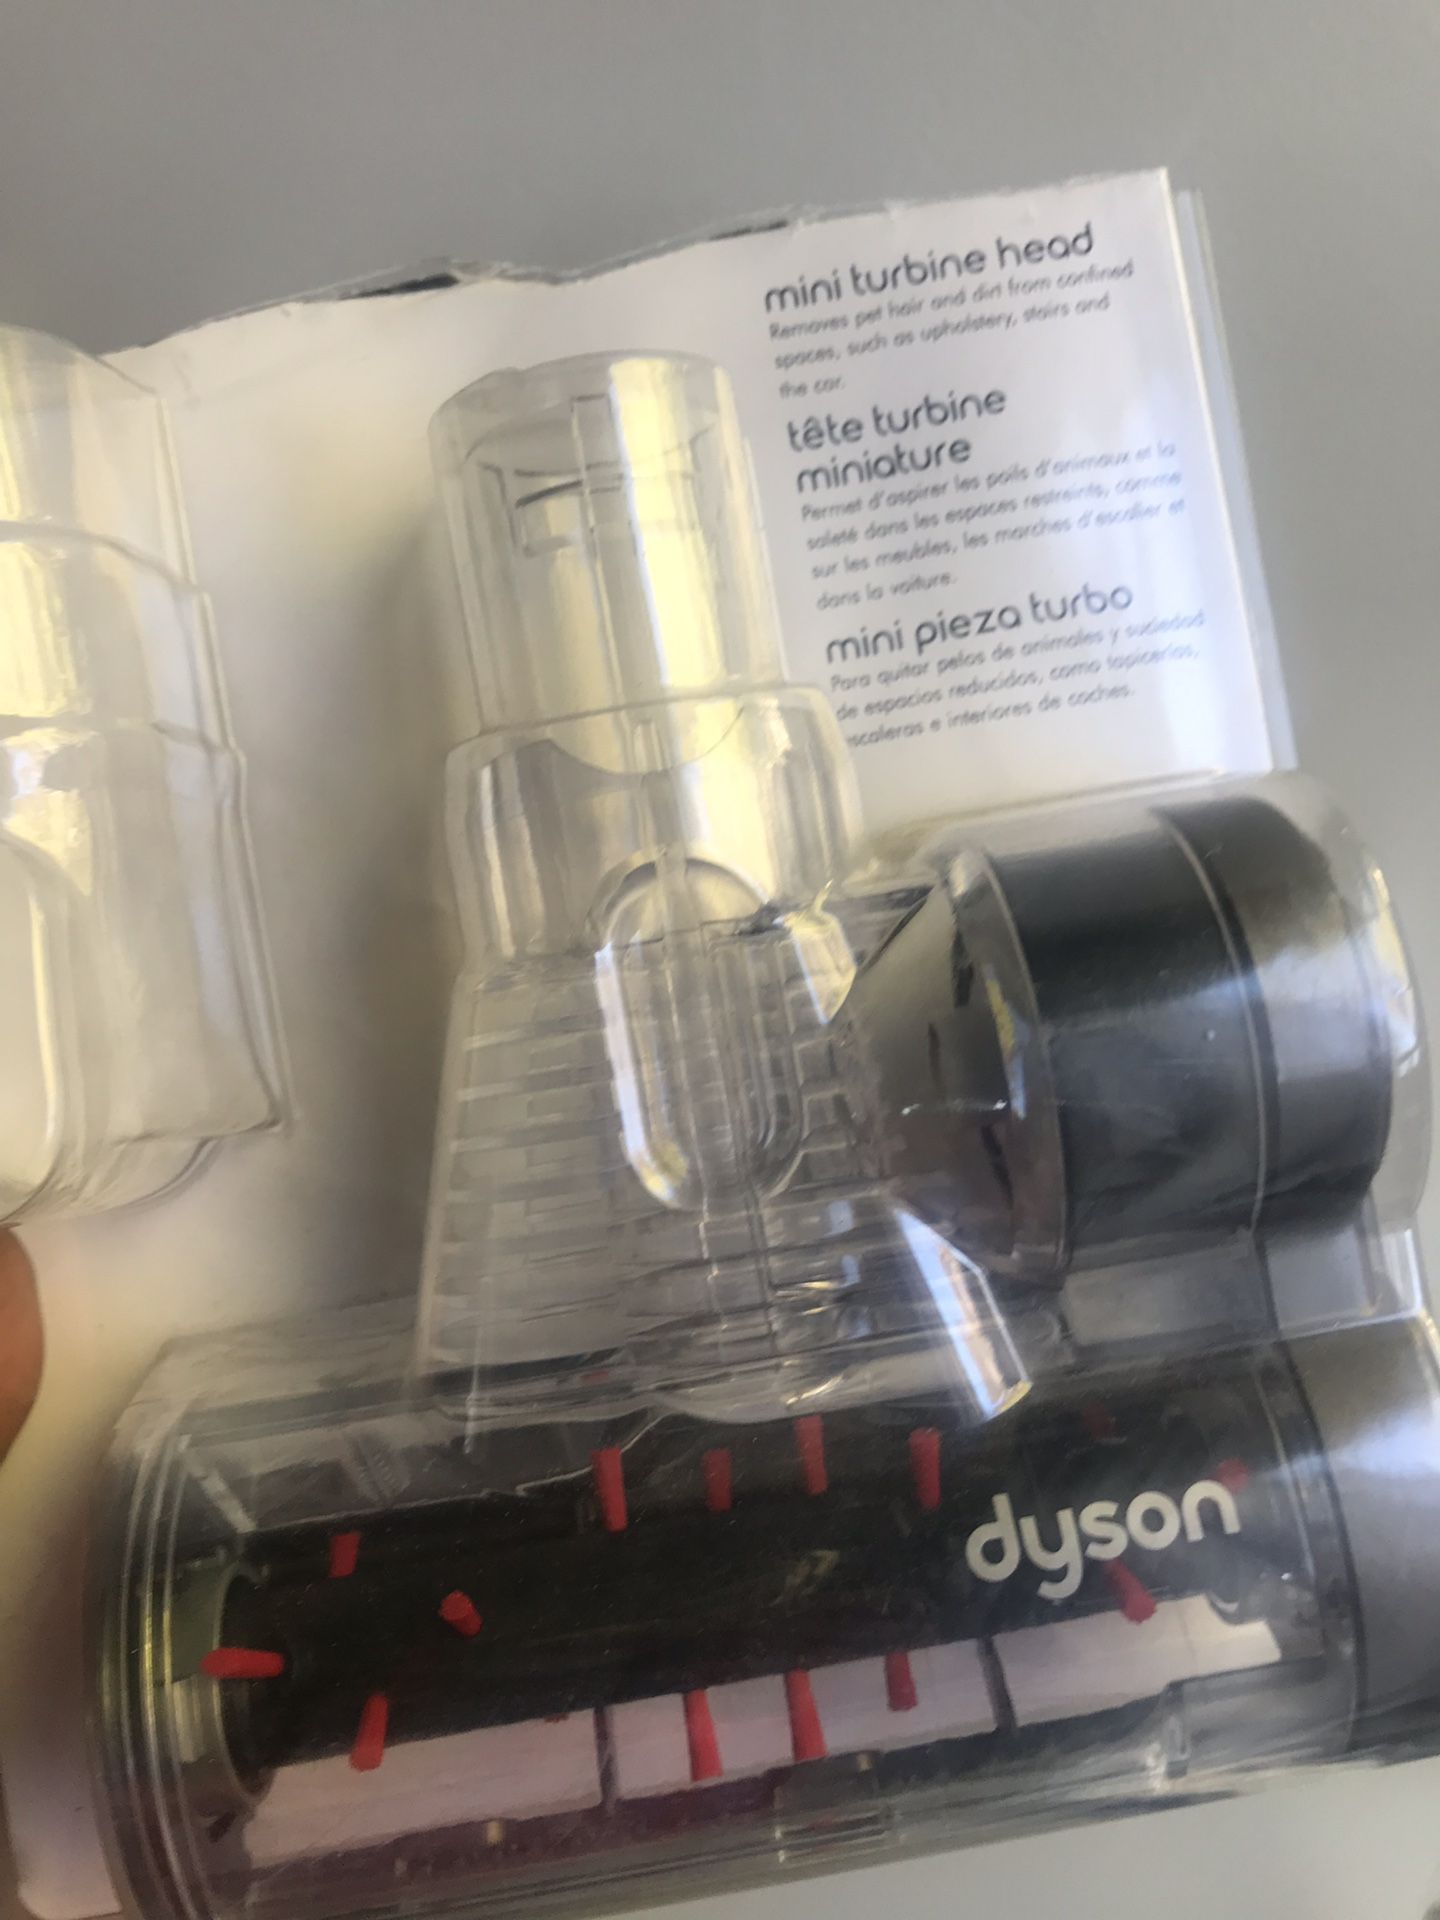 Dyson mini turbine head for the animal vacuum